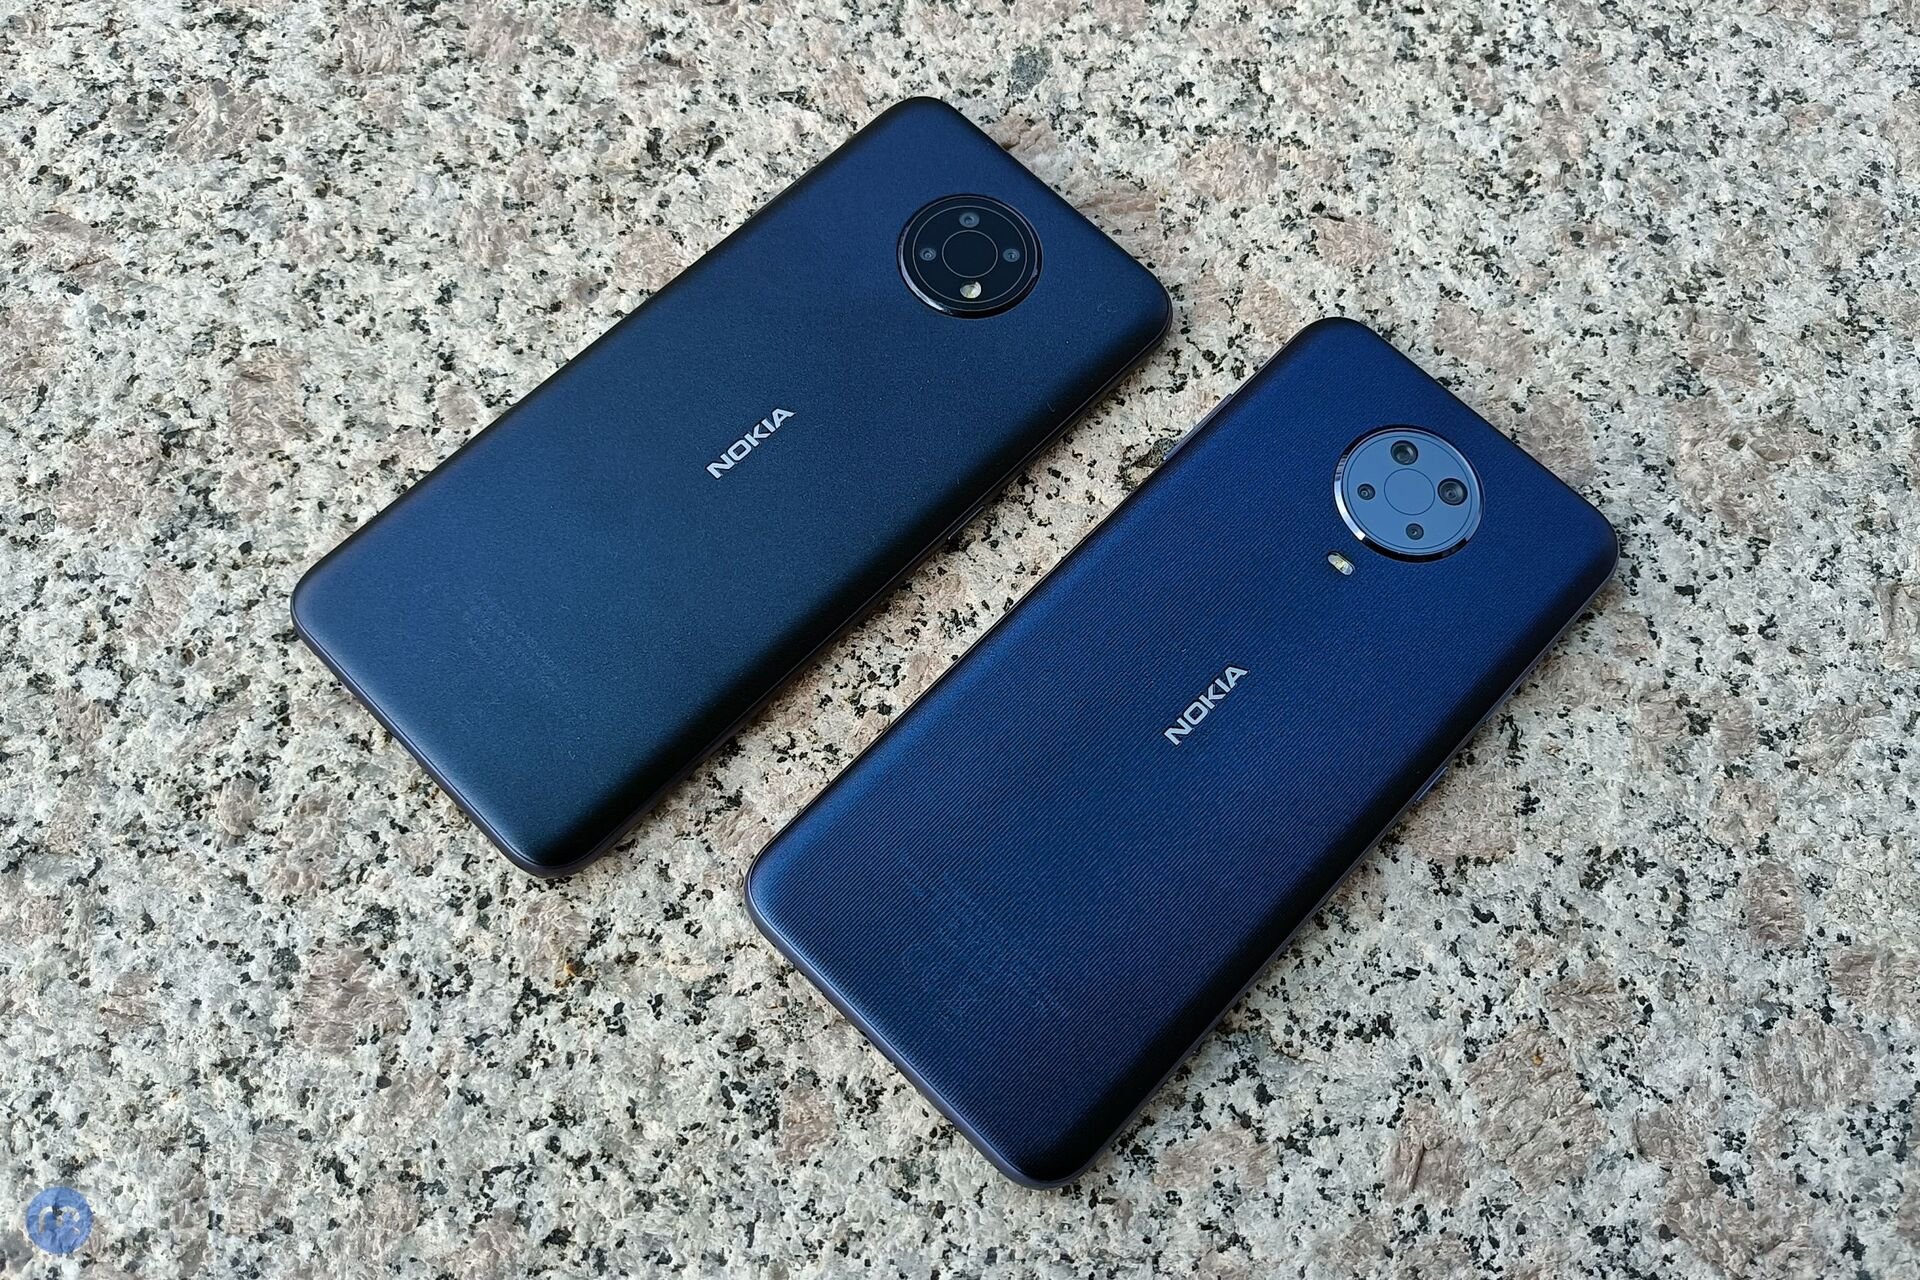 Nokia G10 a Nokia G20